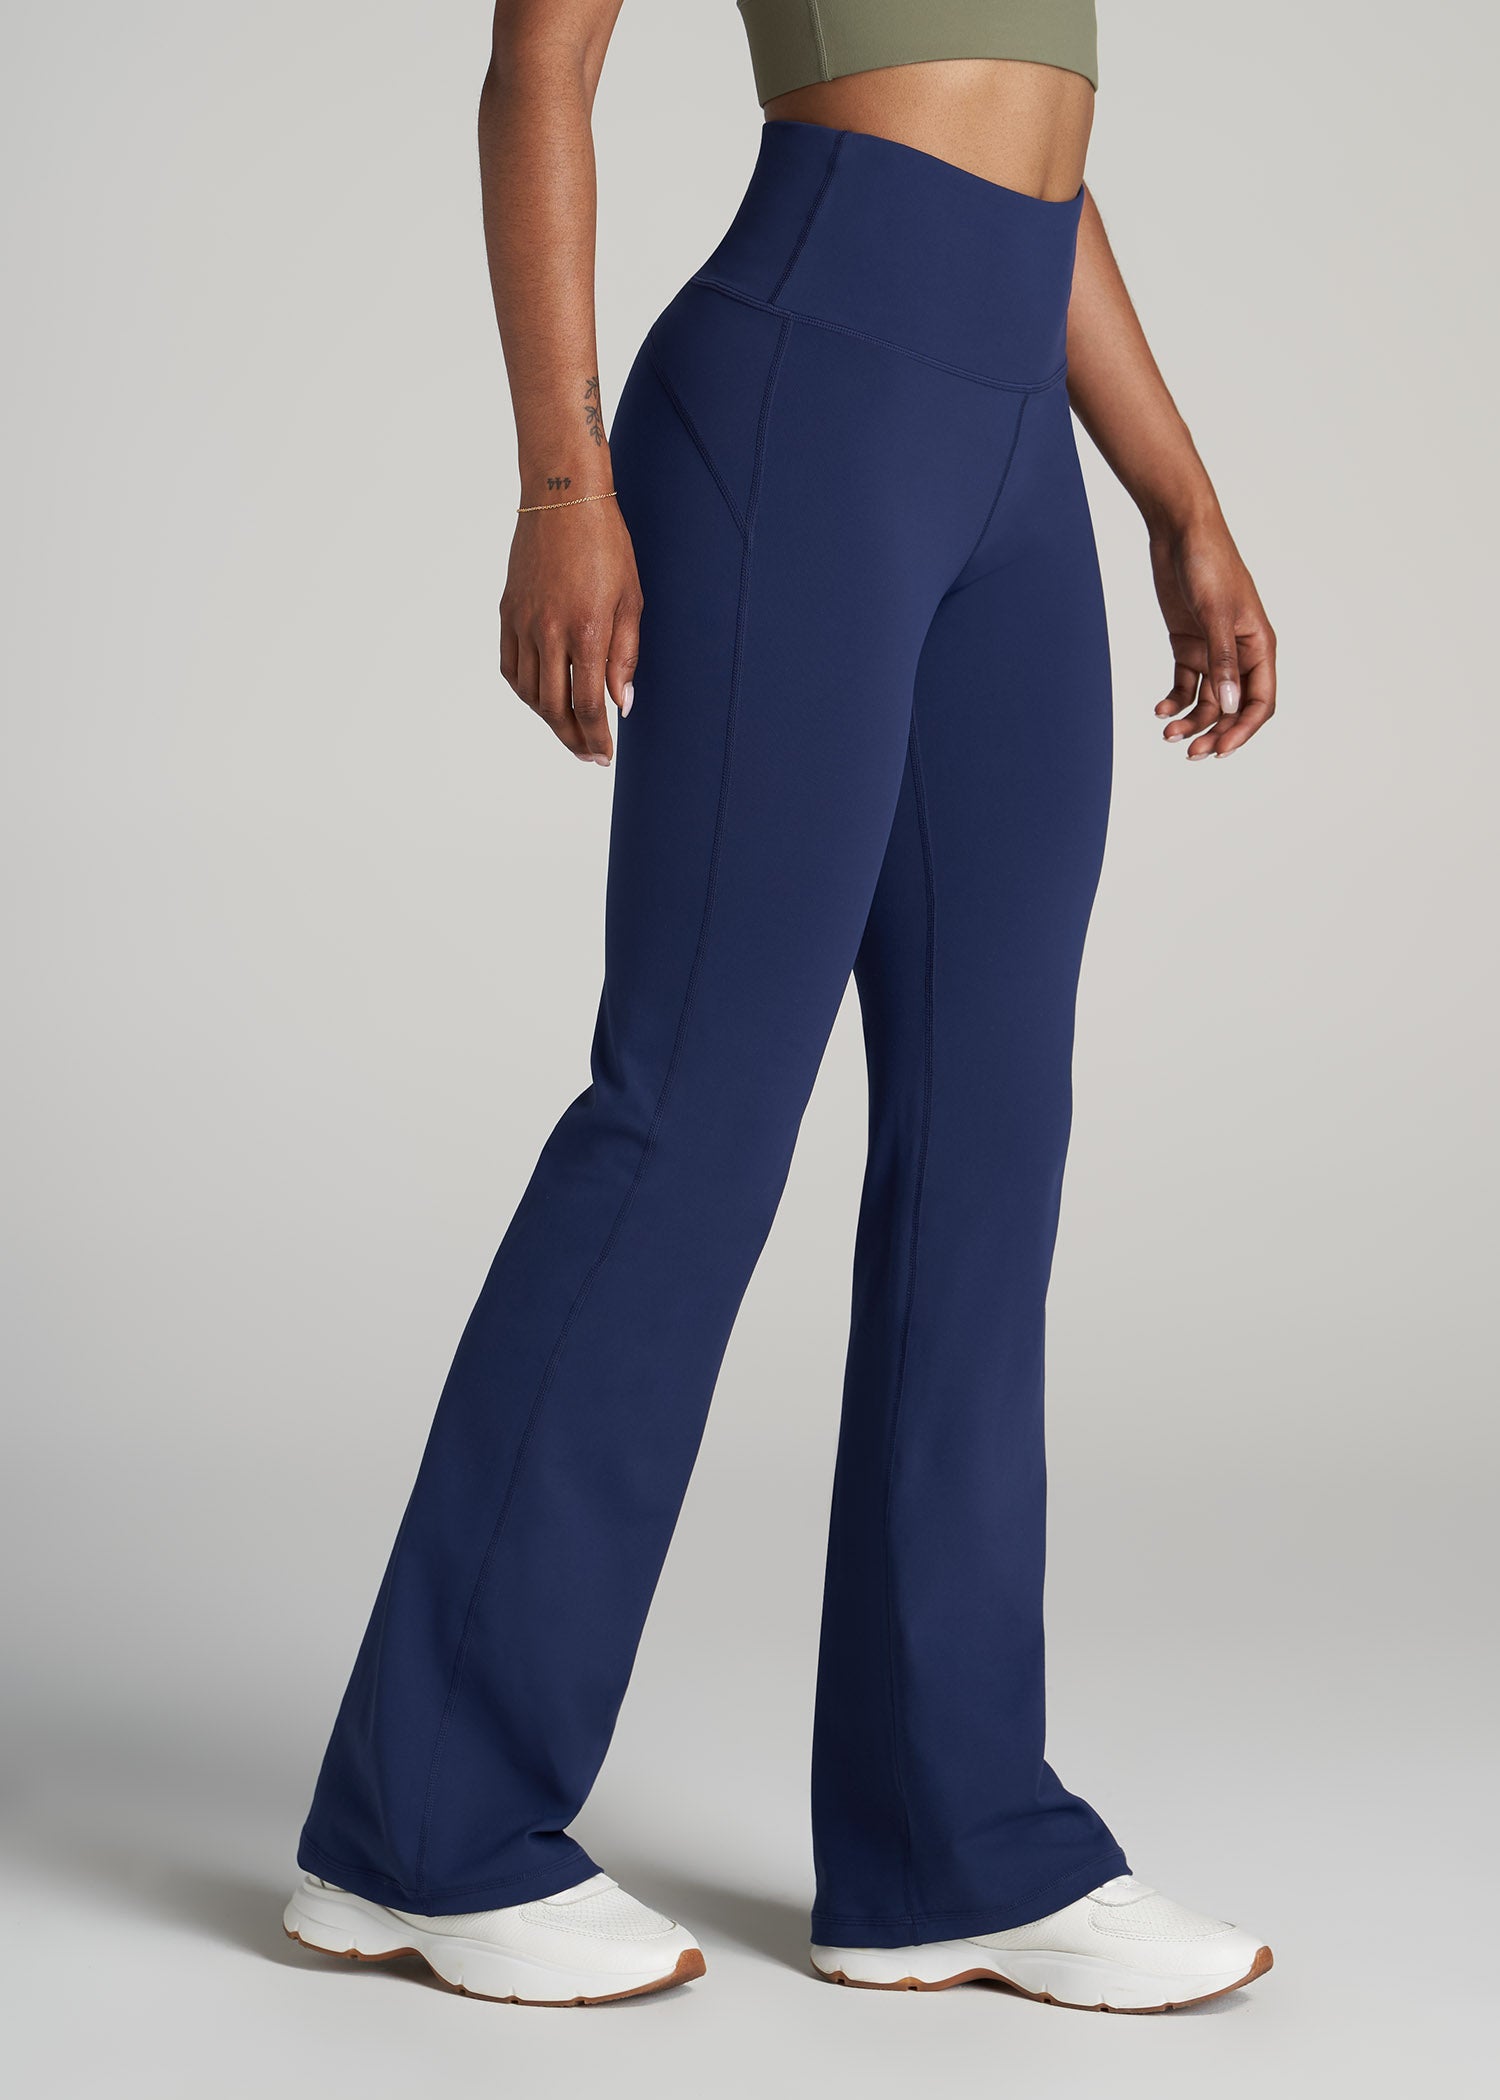 Womens Casual Pants Comfy Solid Color Elastic Waisted Drawstring Yoga Harem  Beach Pants Side Slit Lounge Trousers - Walmart.com